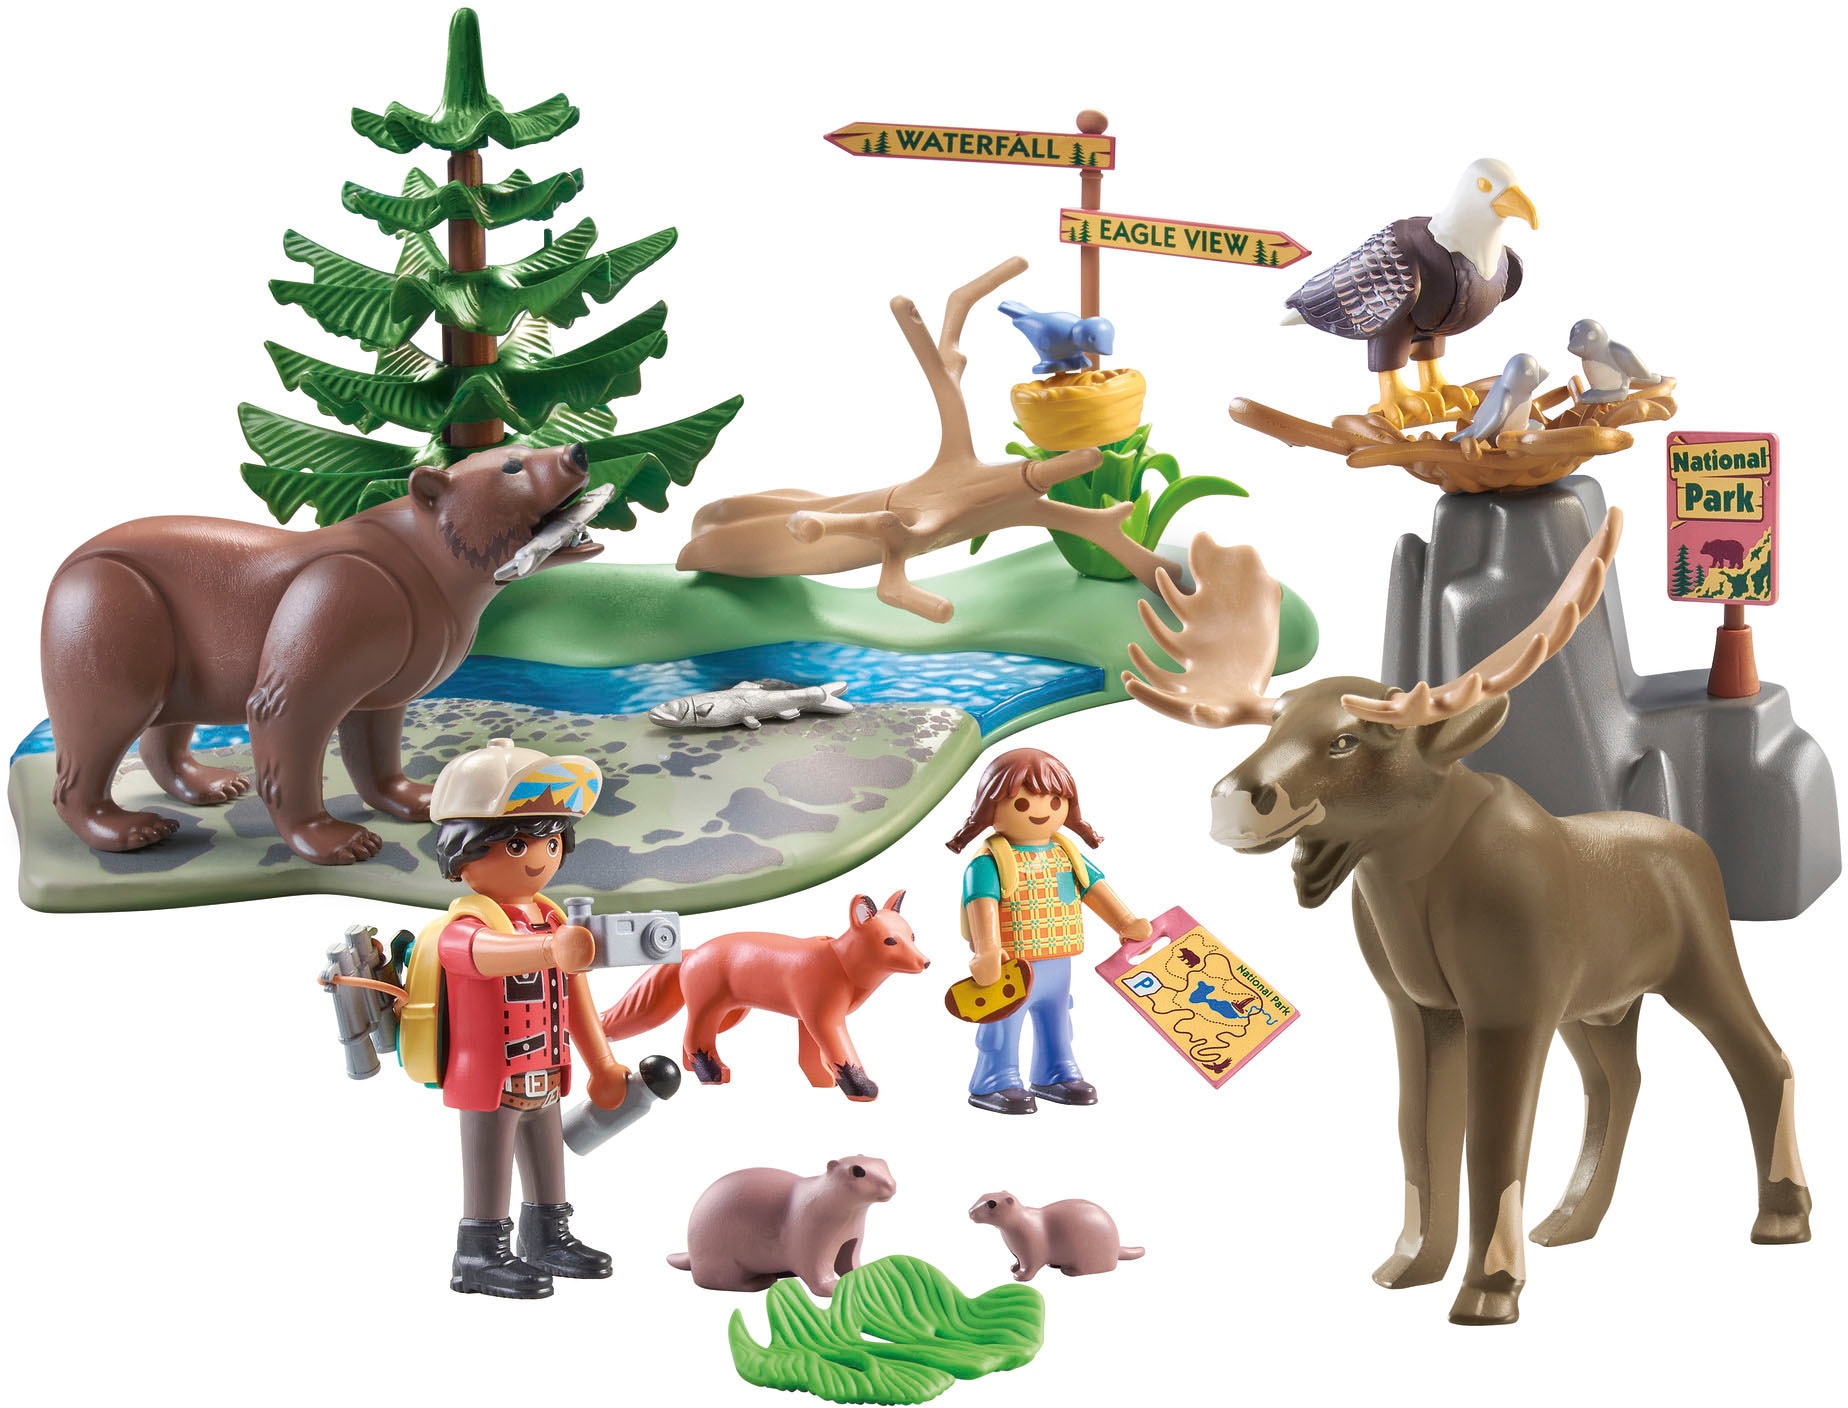 Playmobil® Konstruktions-Spielset »Wiltopia - Abstecher zu den Tieren Nordamerika (71403), Wiltopia«, (54 St.), teilweise aus recyceltem Material